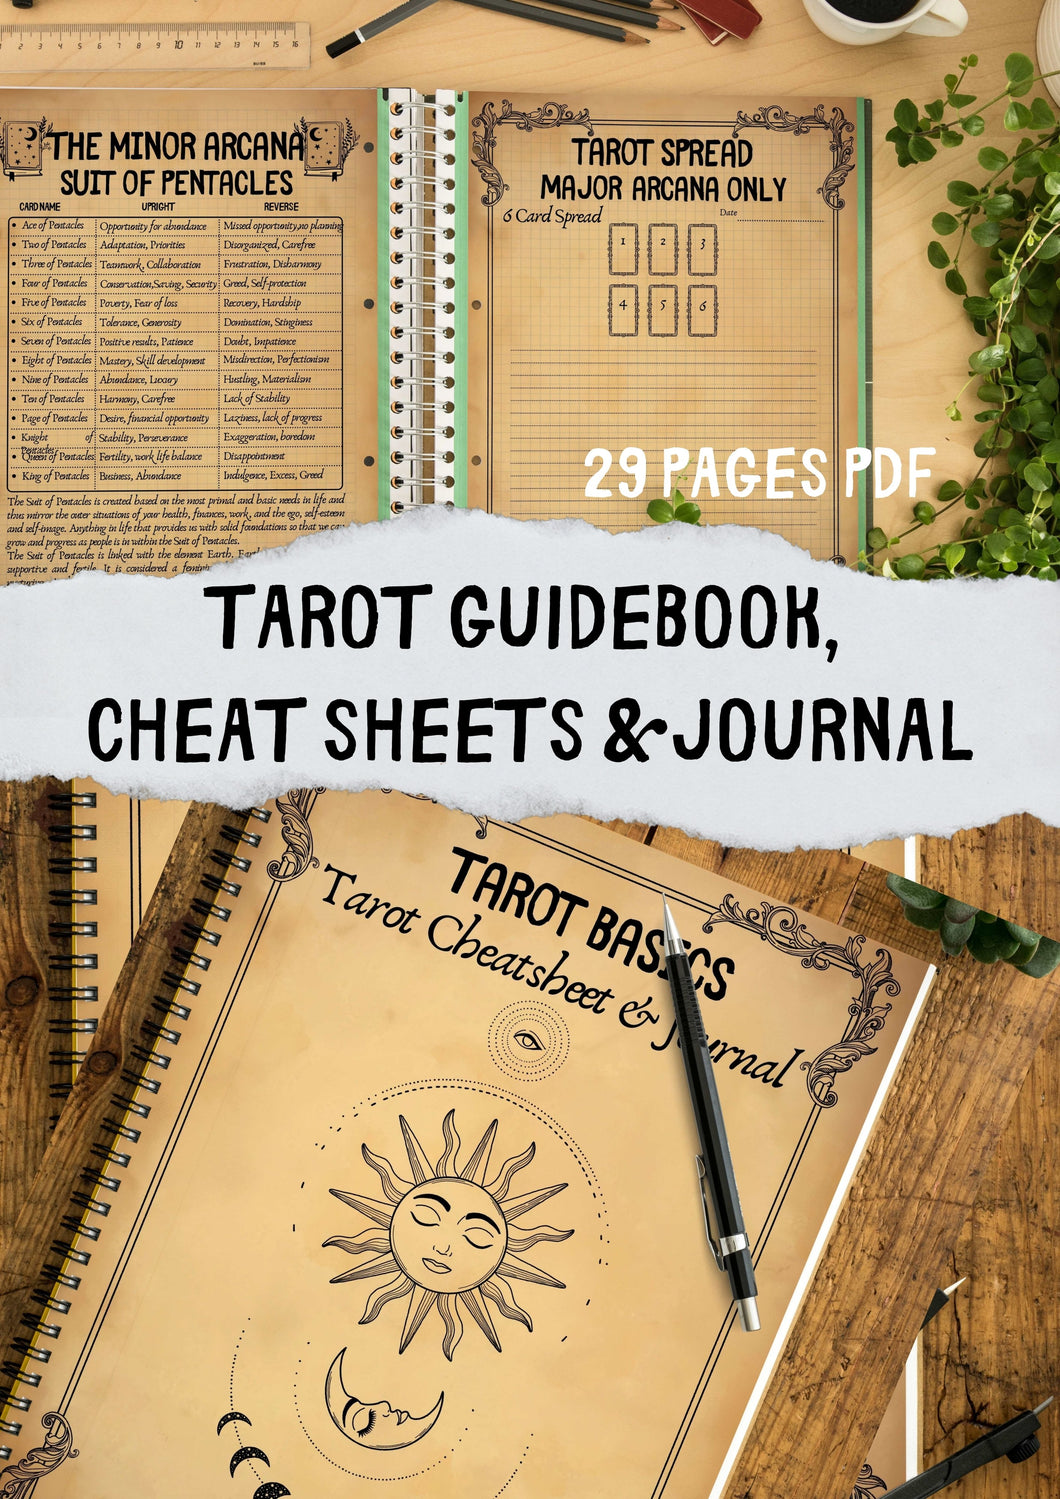 Tarot Guidebook, cheat sheets, wallart & journal 29 pages pdf printable